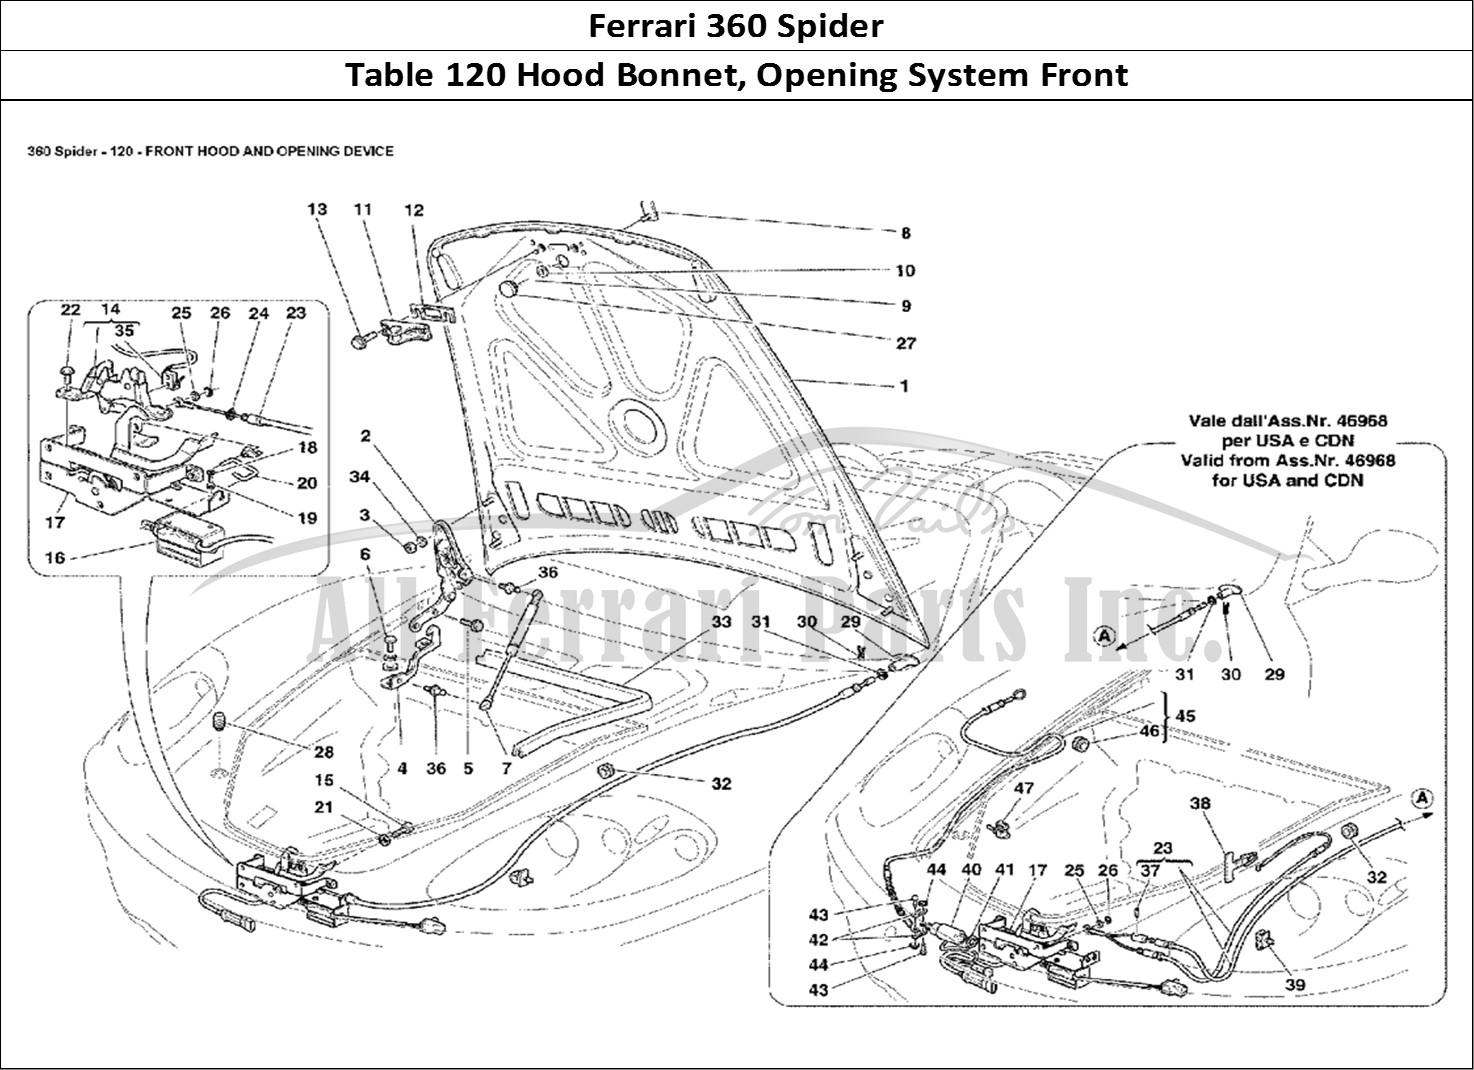 Ferrari Parts Ferrari 360 Spider Page 120 Front Hood and Opening De